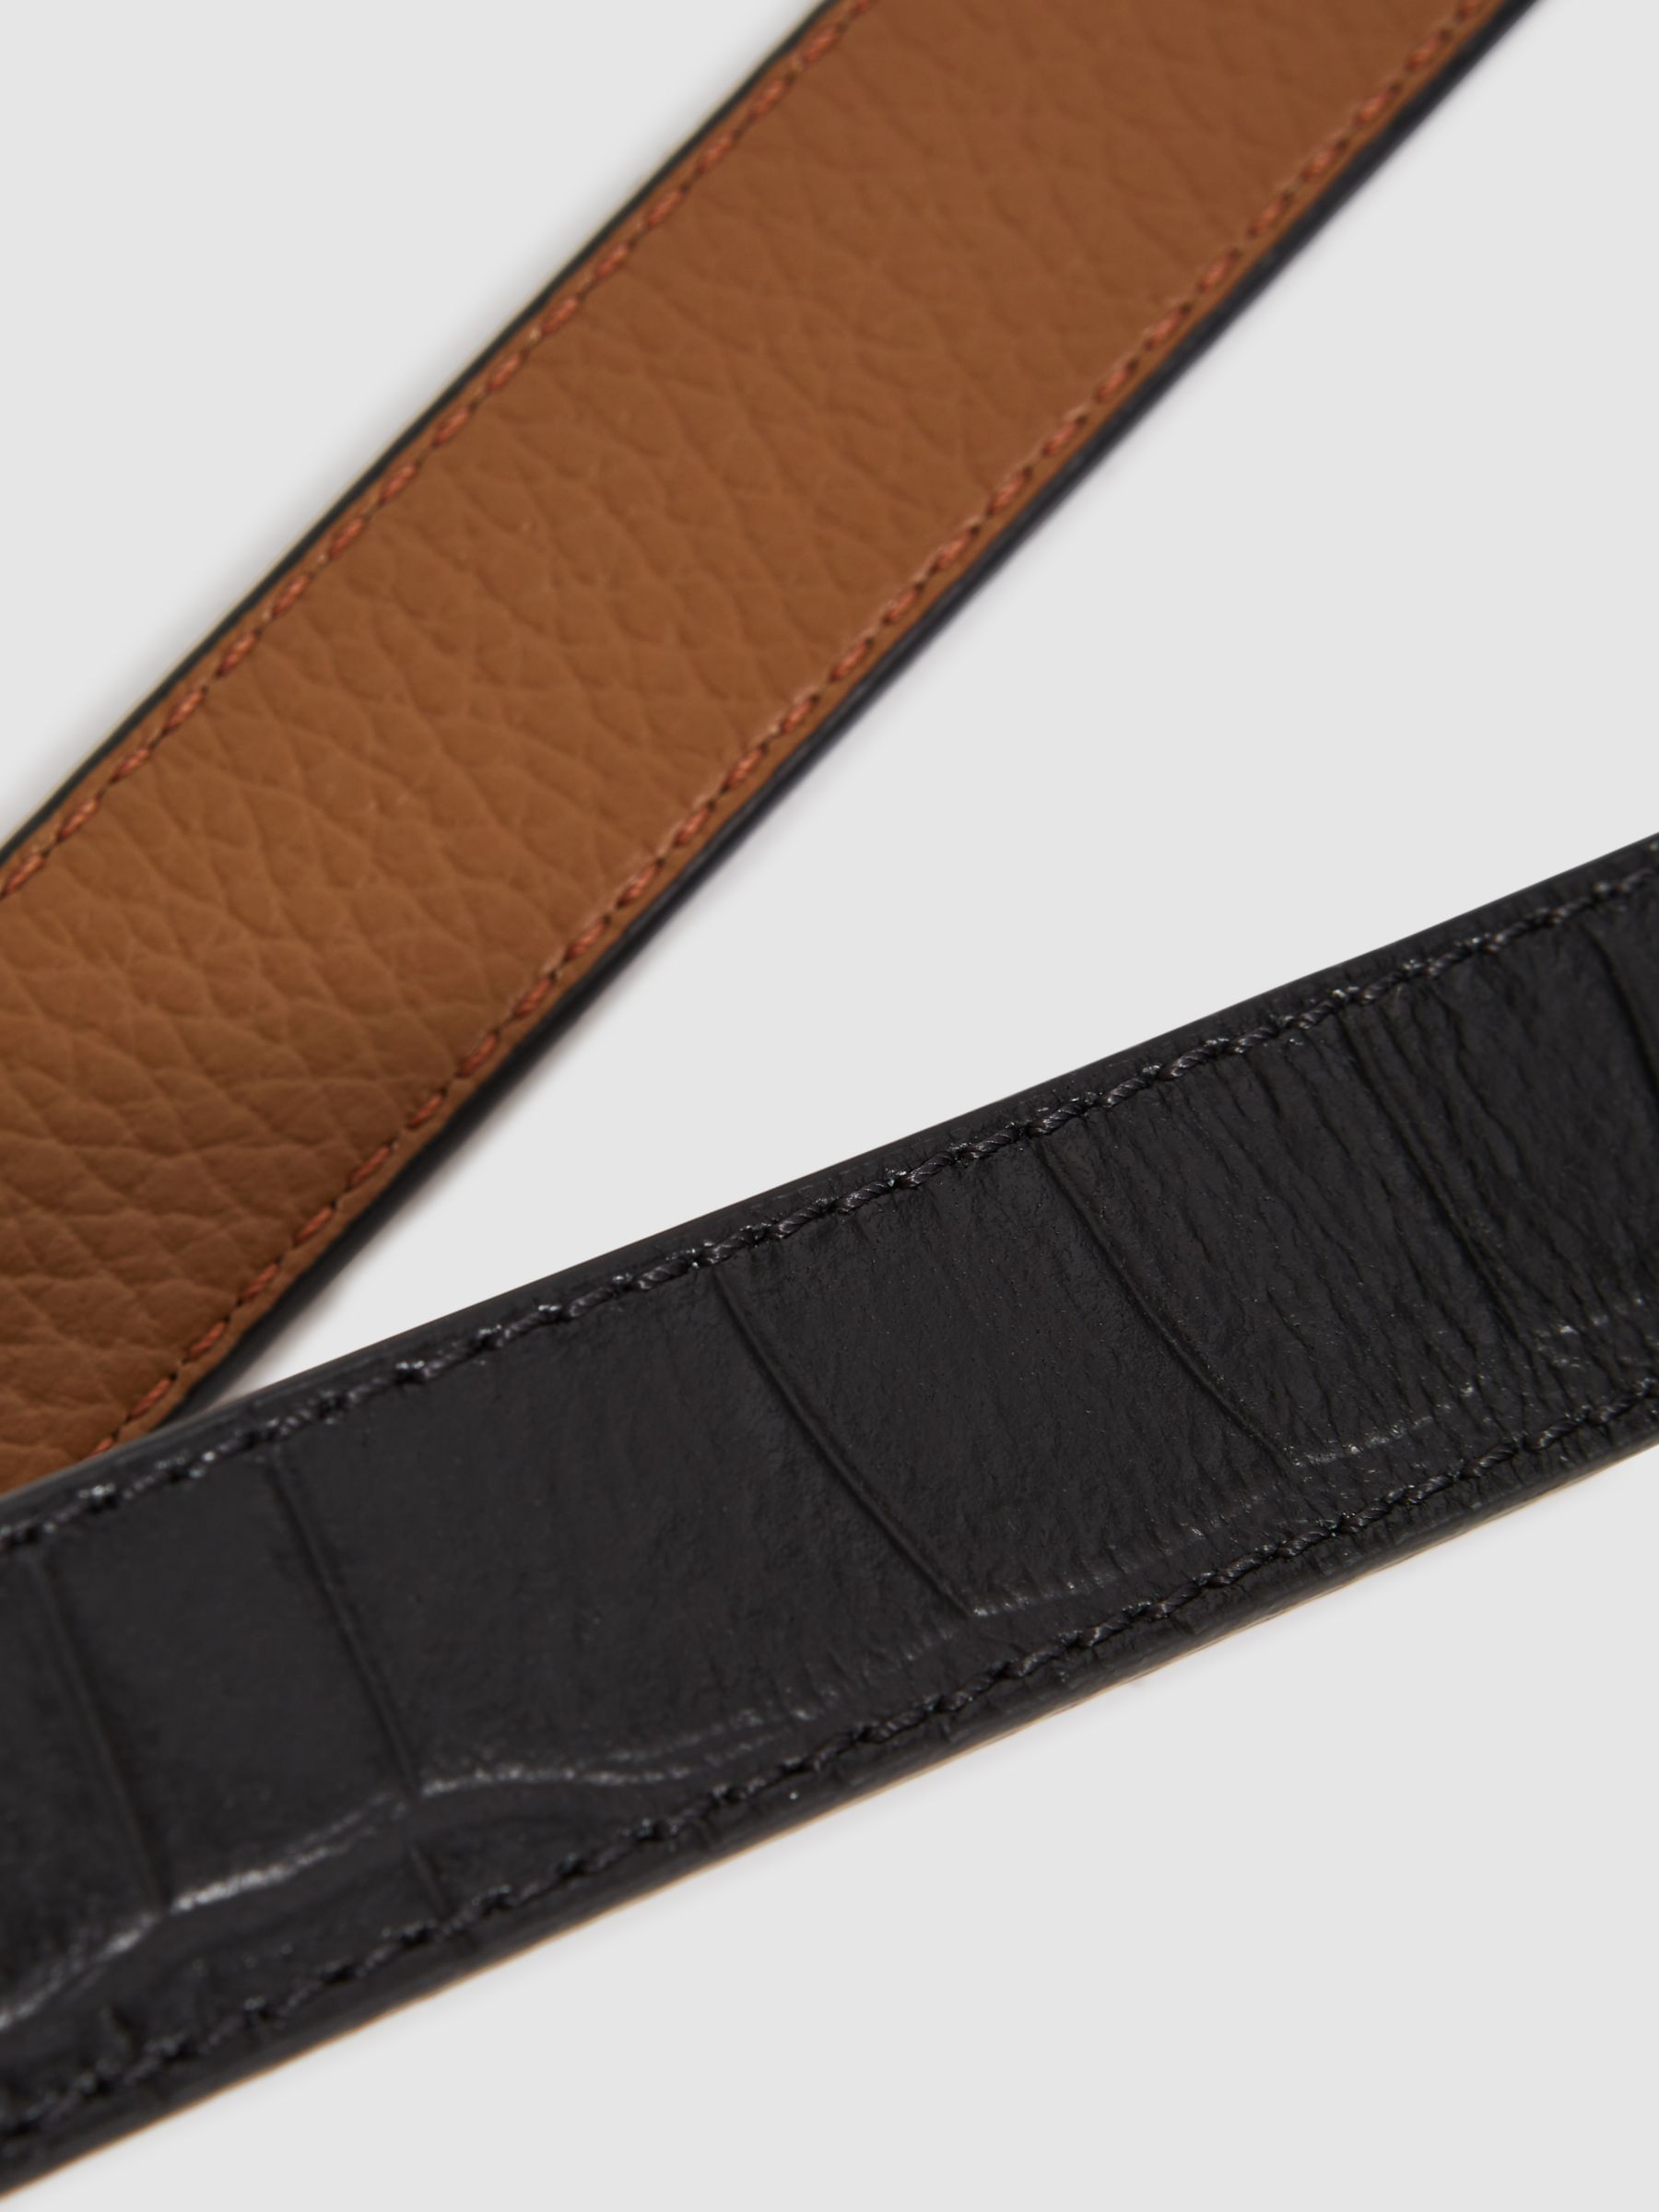 Reiss Madison Reversible Leather Belt, Black/Camel, S